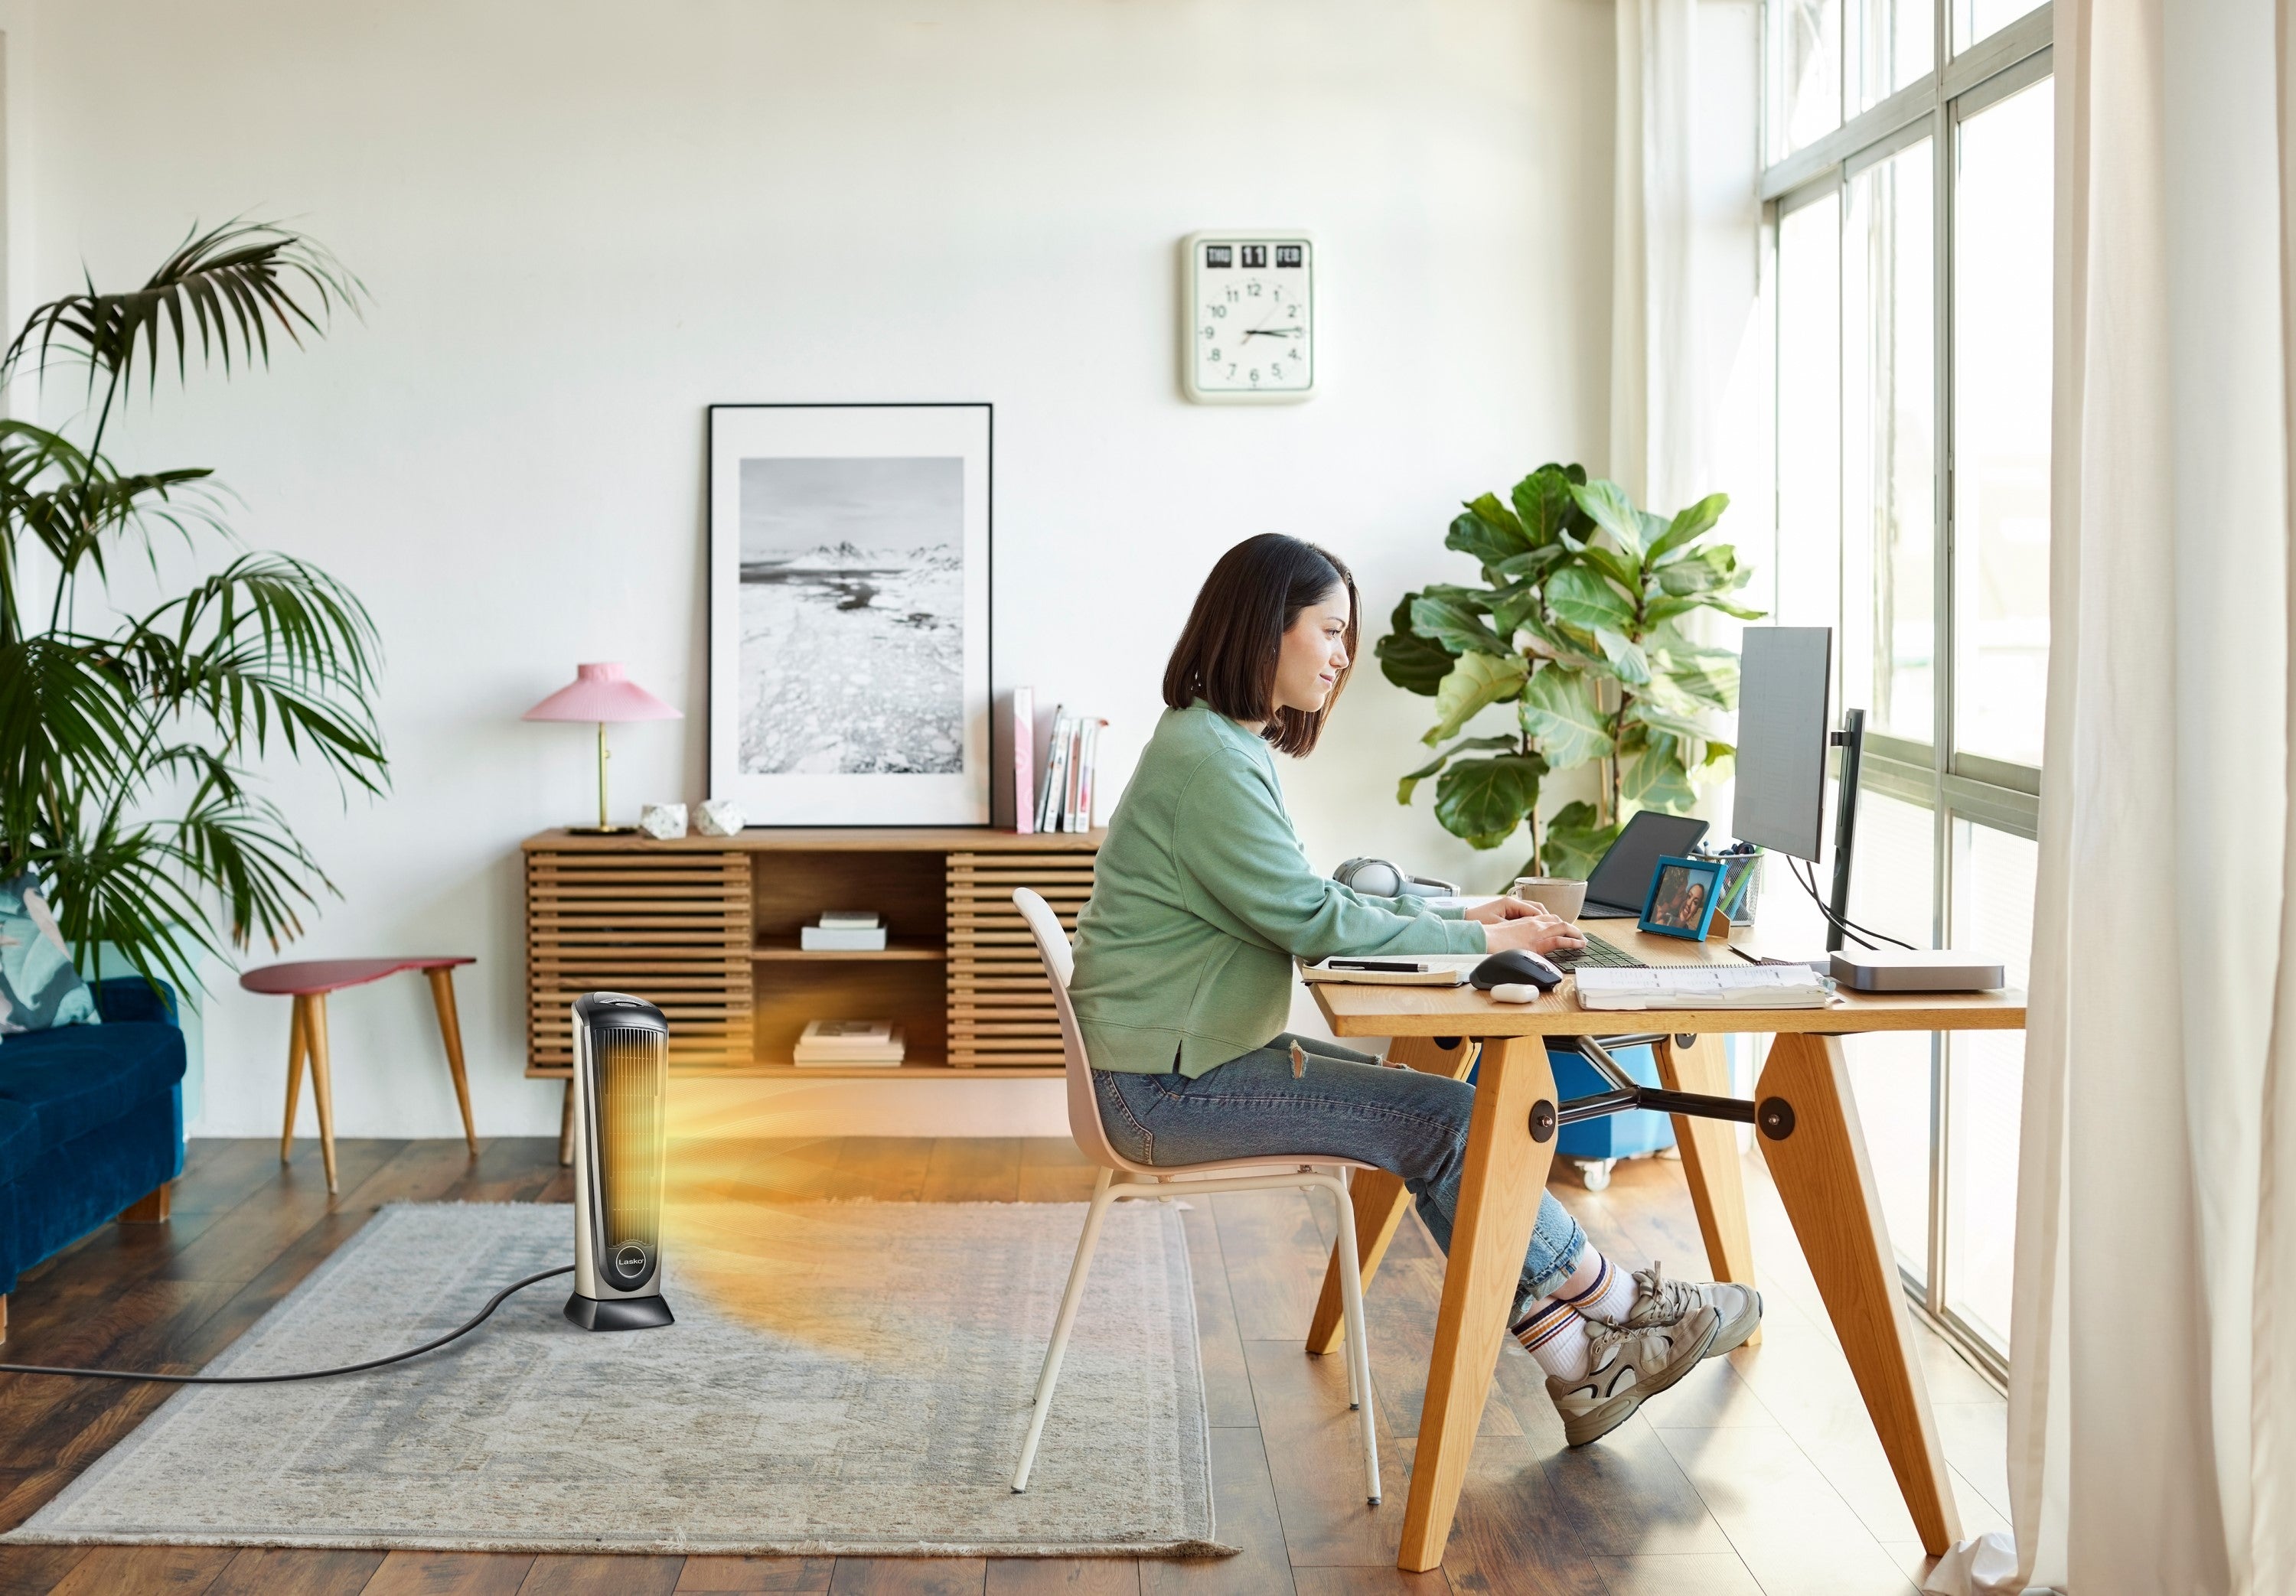 Electric Portable Heater Mini Wall Mount Home Office Desktop